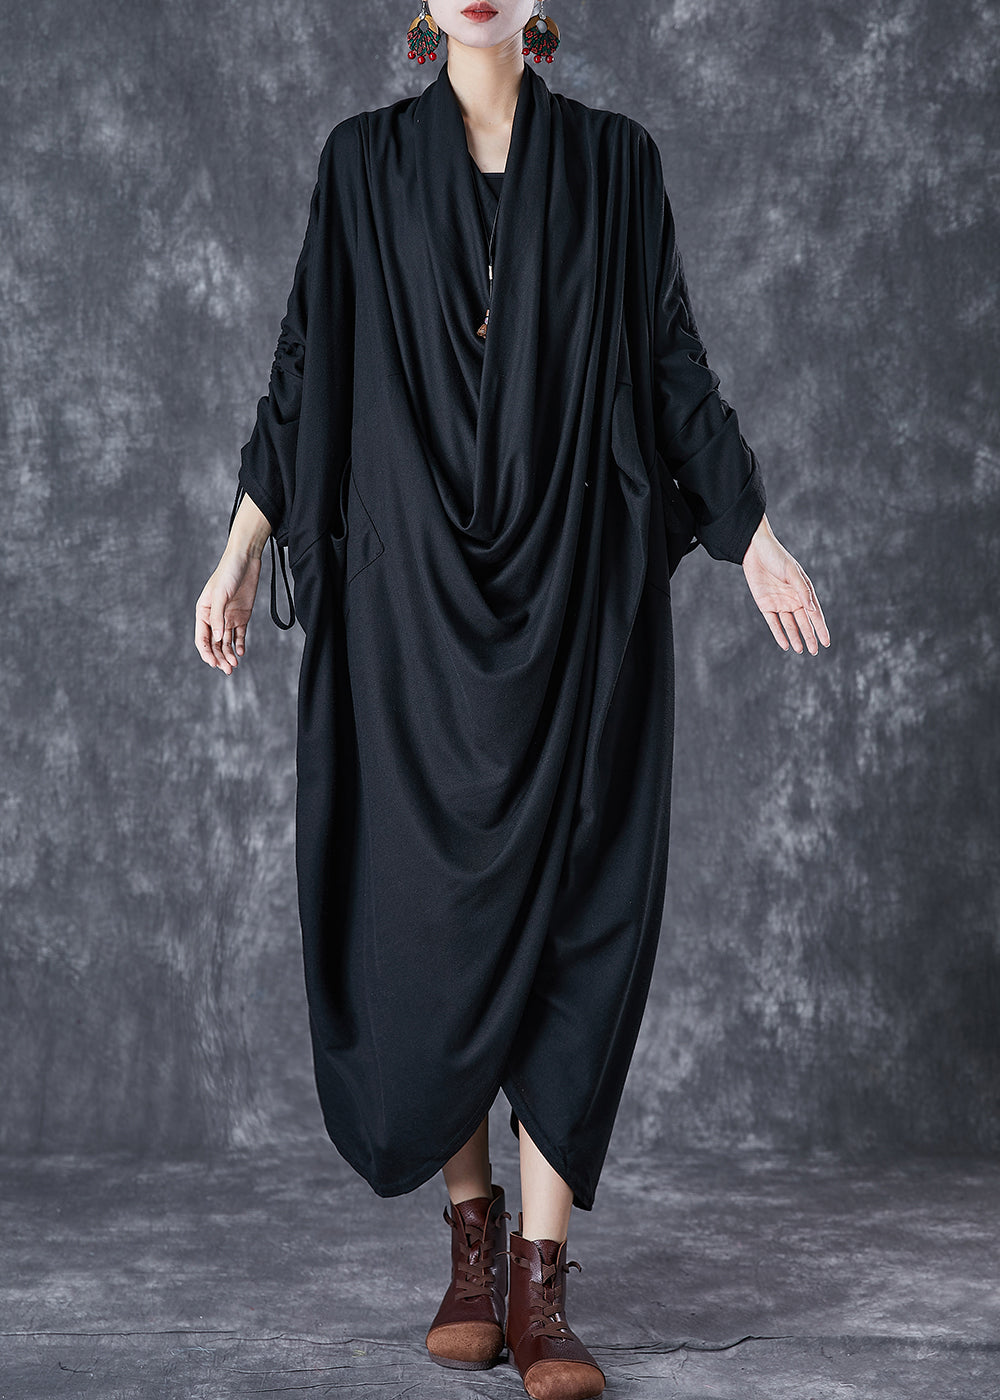 Unique Black Asymmetrical Wrinkled Cotton Gown Dress Fall Ada Fashion